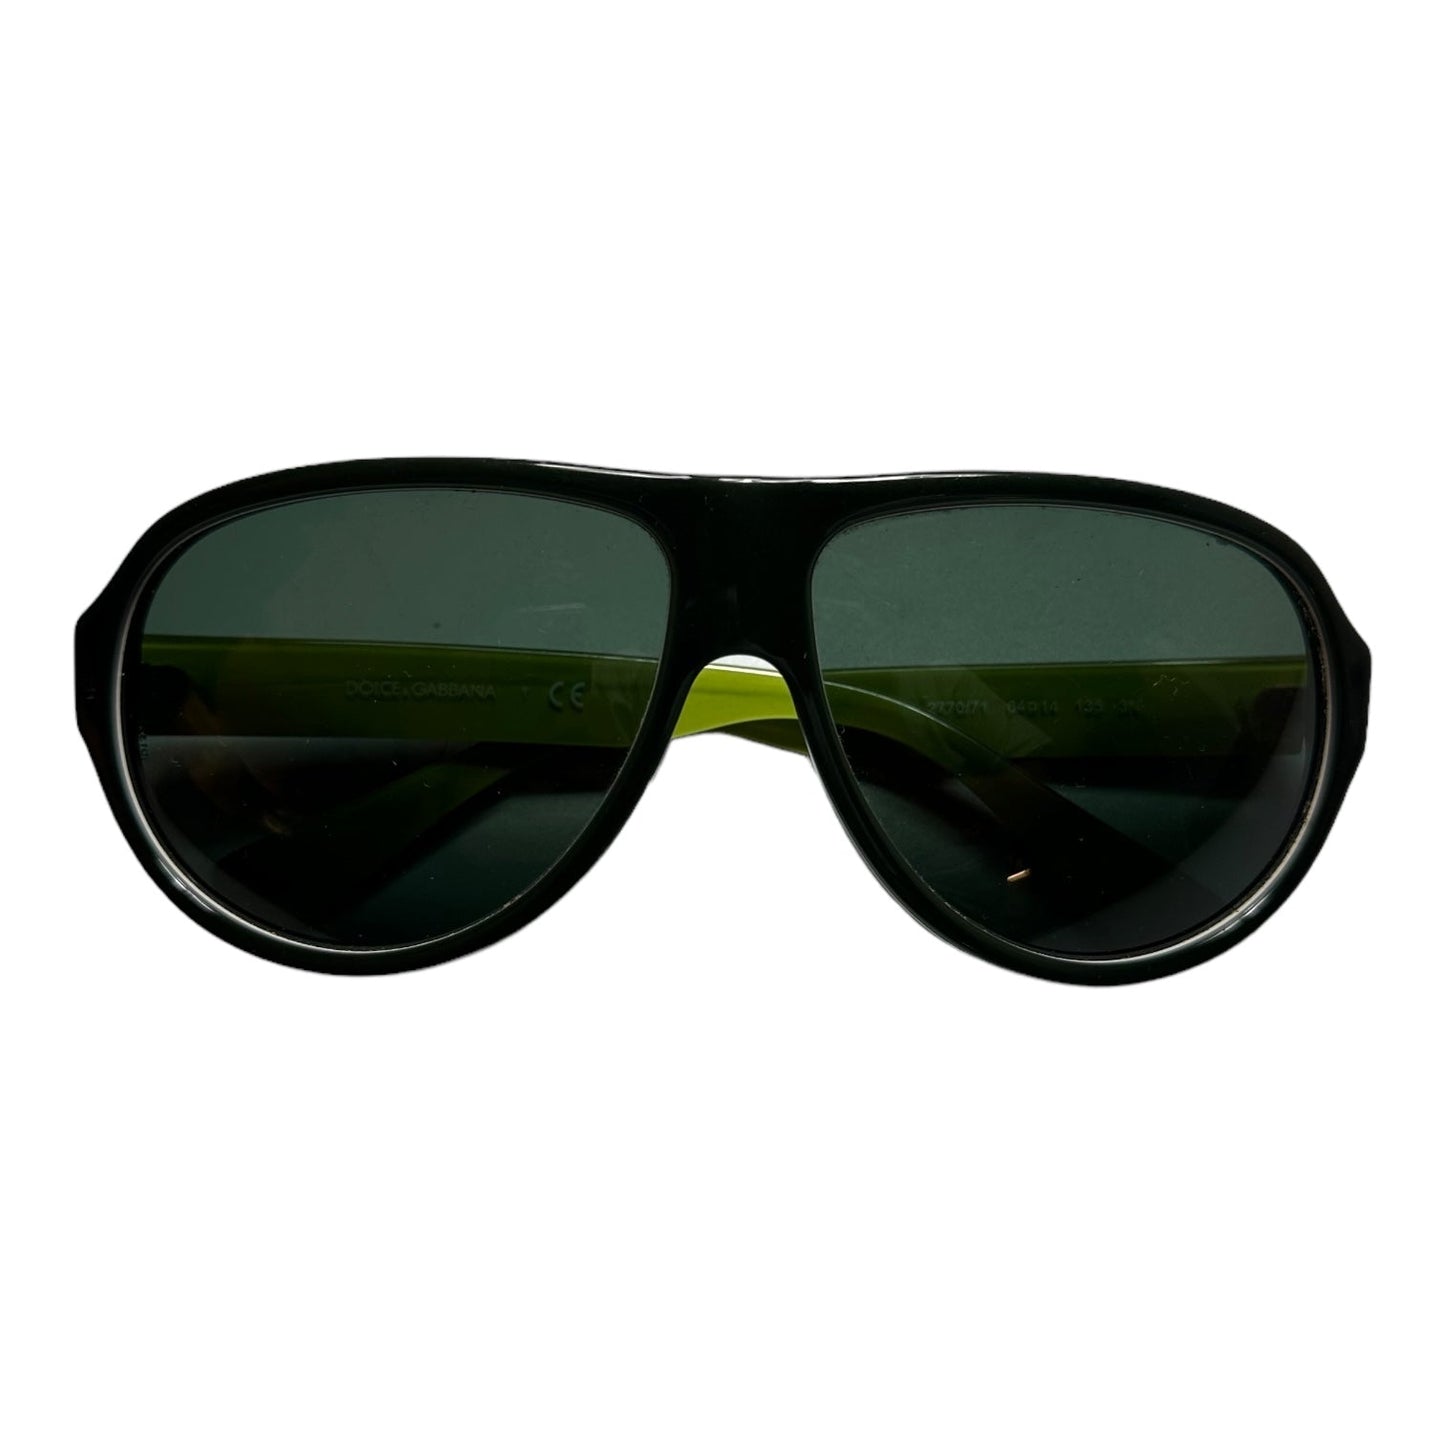 Dolce Gabbana Women’s Green Sunglasses